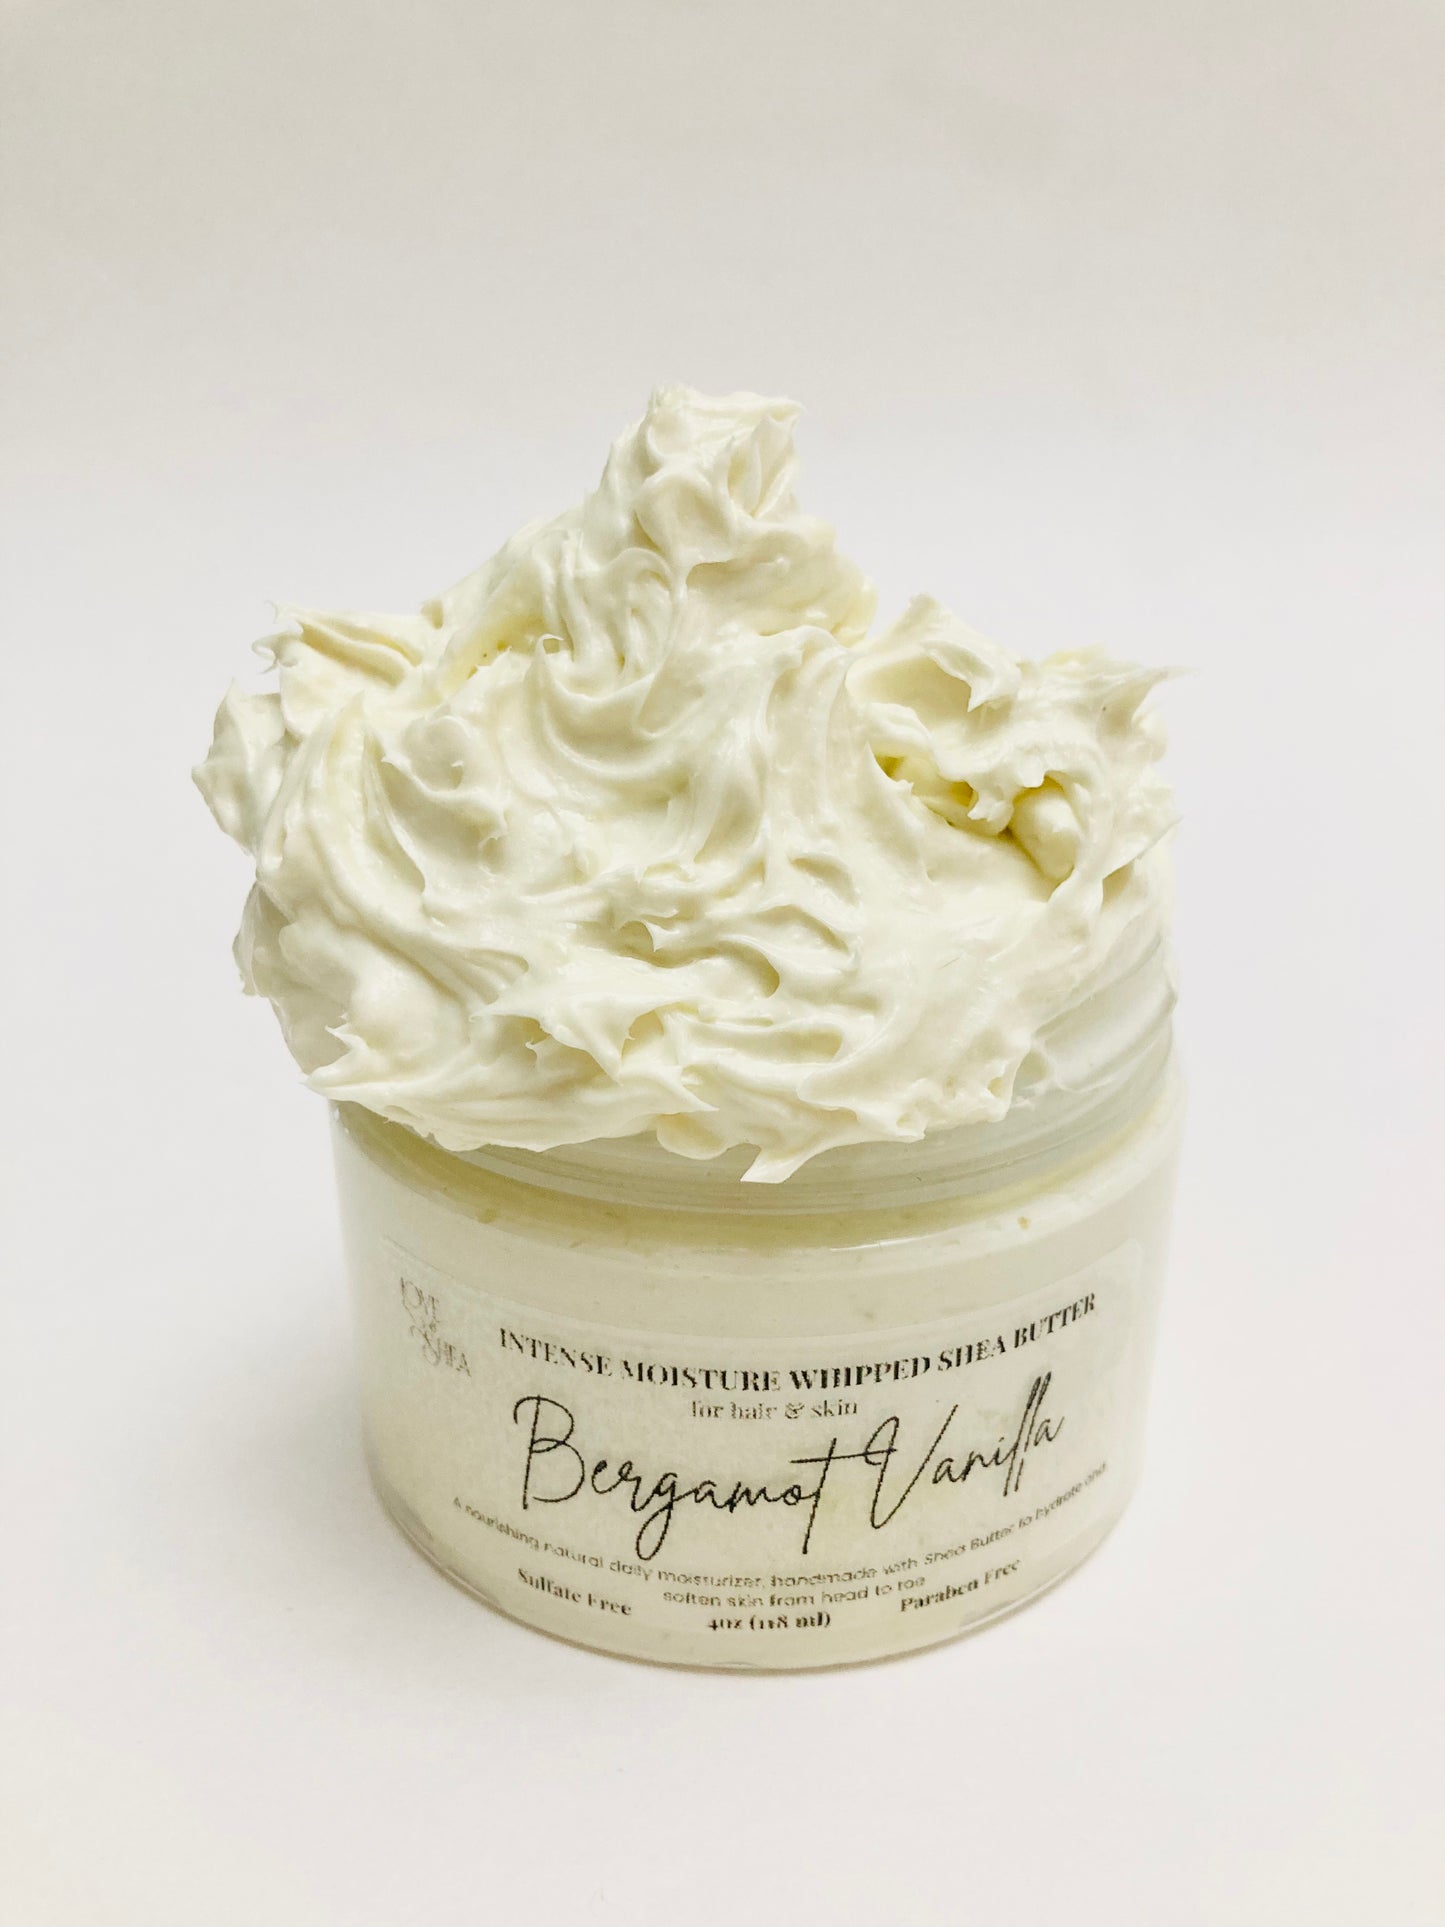 Bergamot Vanilla Body Butter